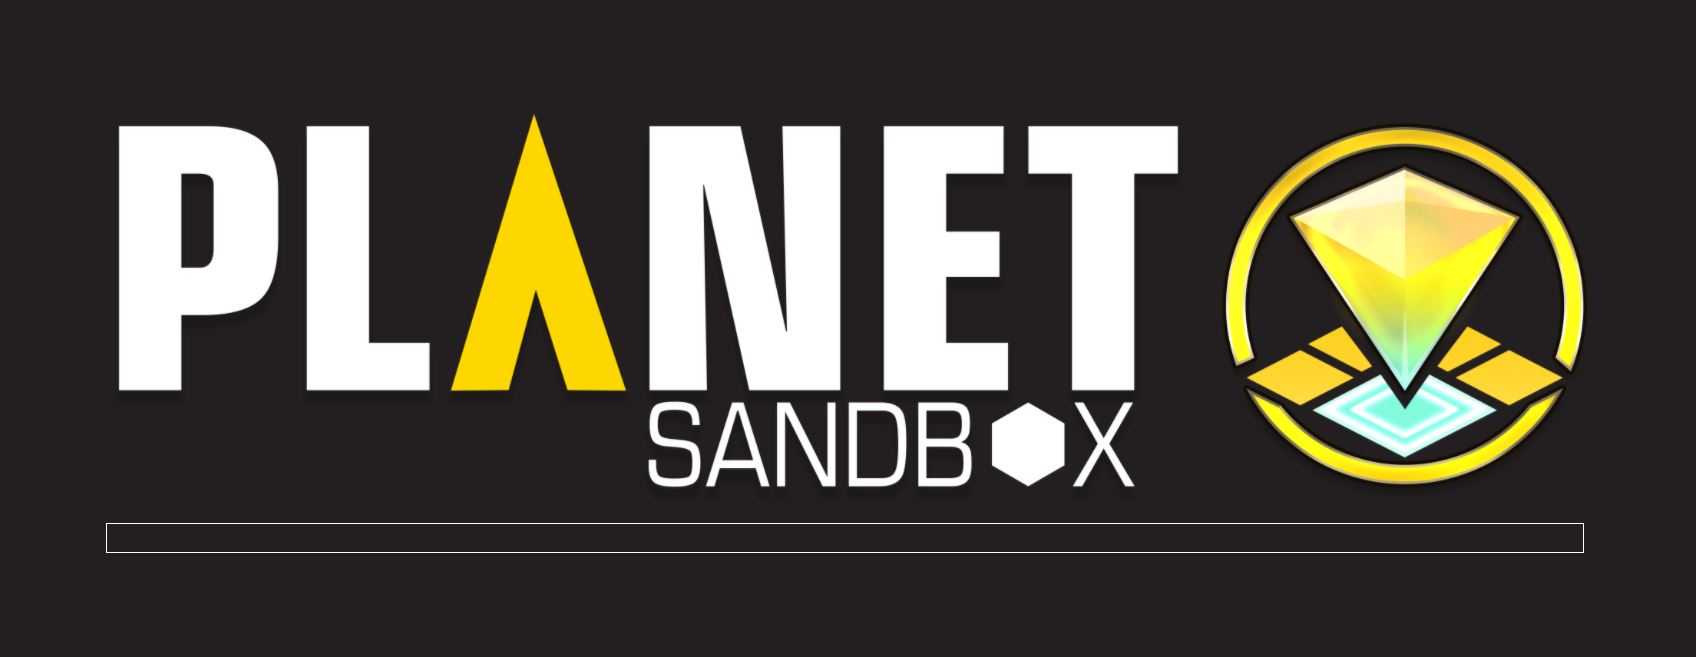 Planet Sandbox PSB